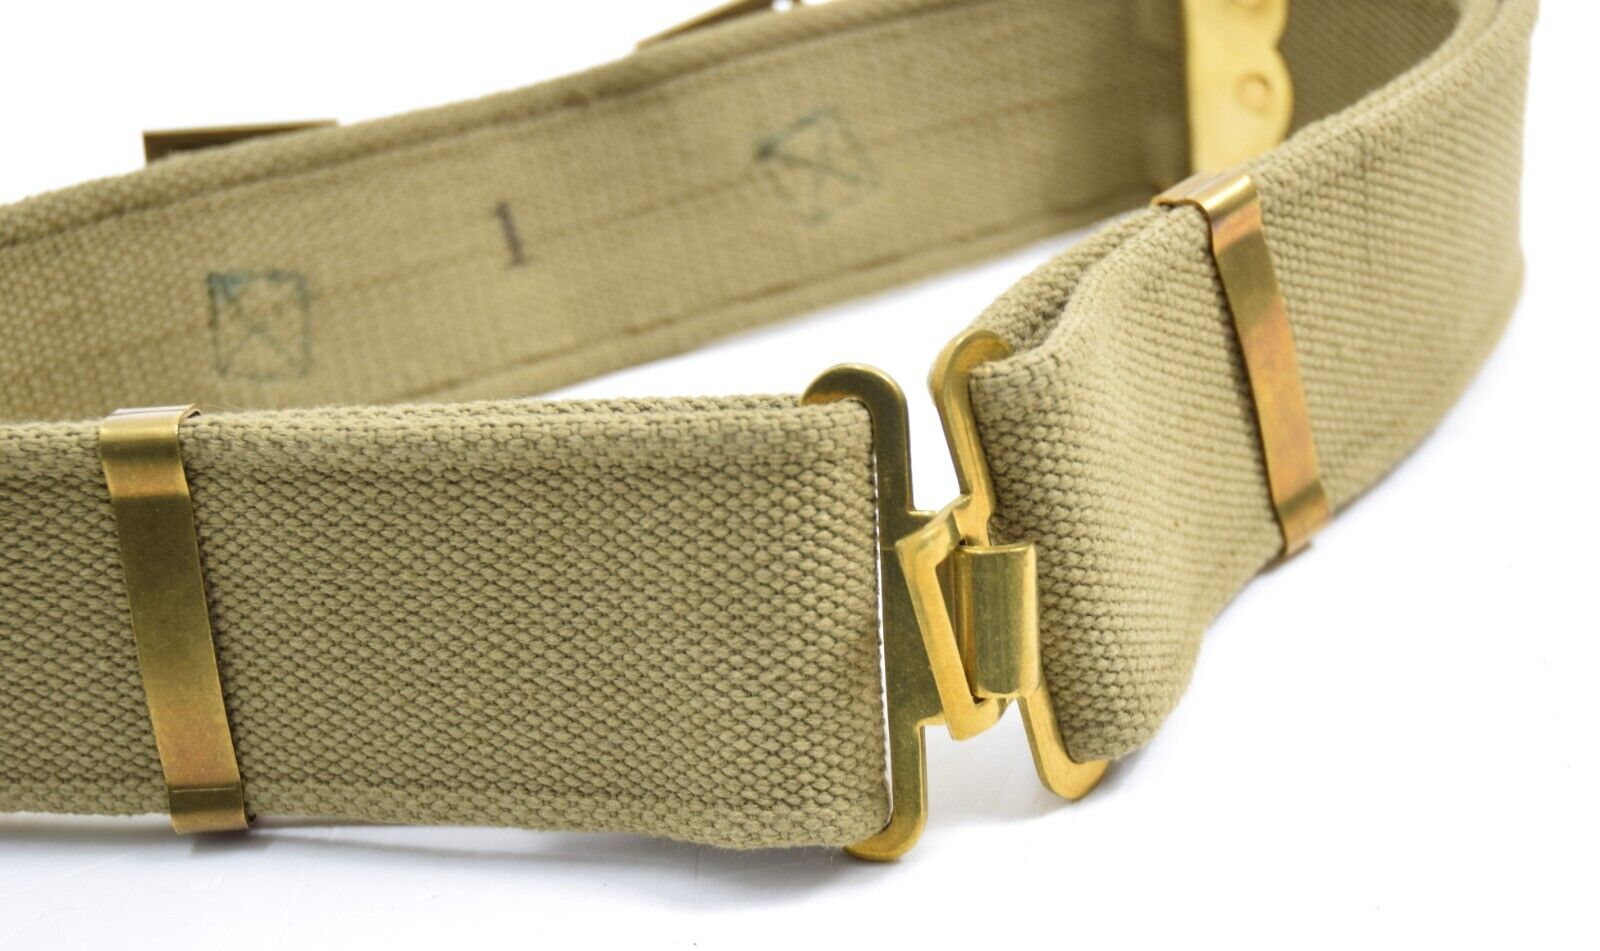 Original Italian Army M37 Canvas Belt With Brass Buckles WW2 1940s Issue Webbing